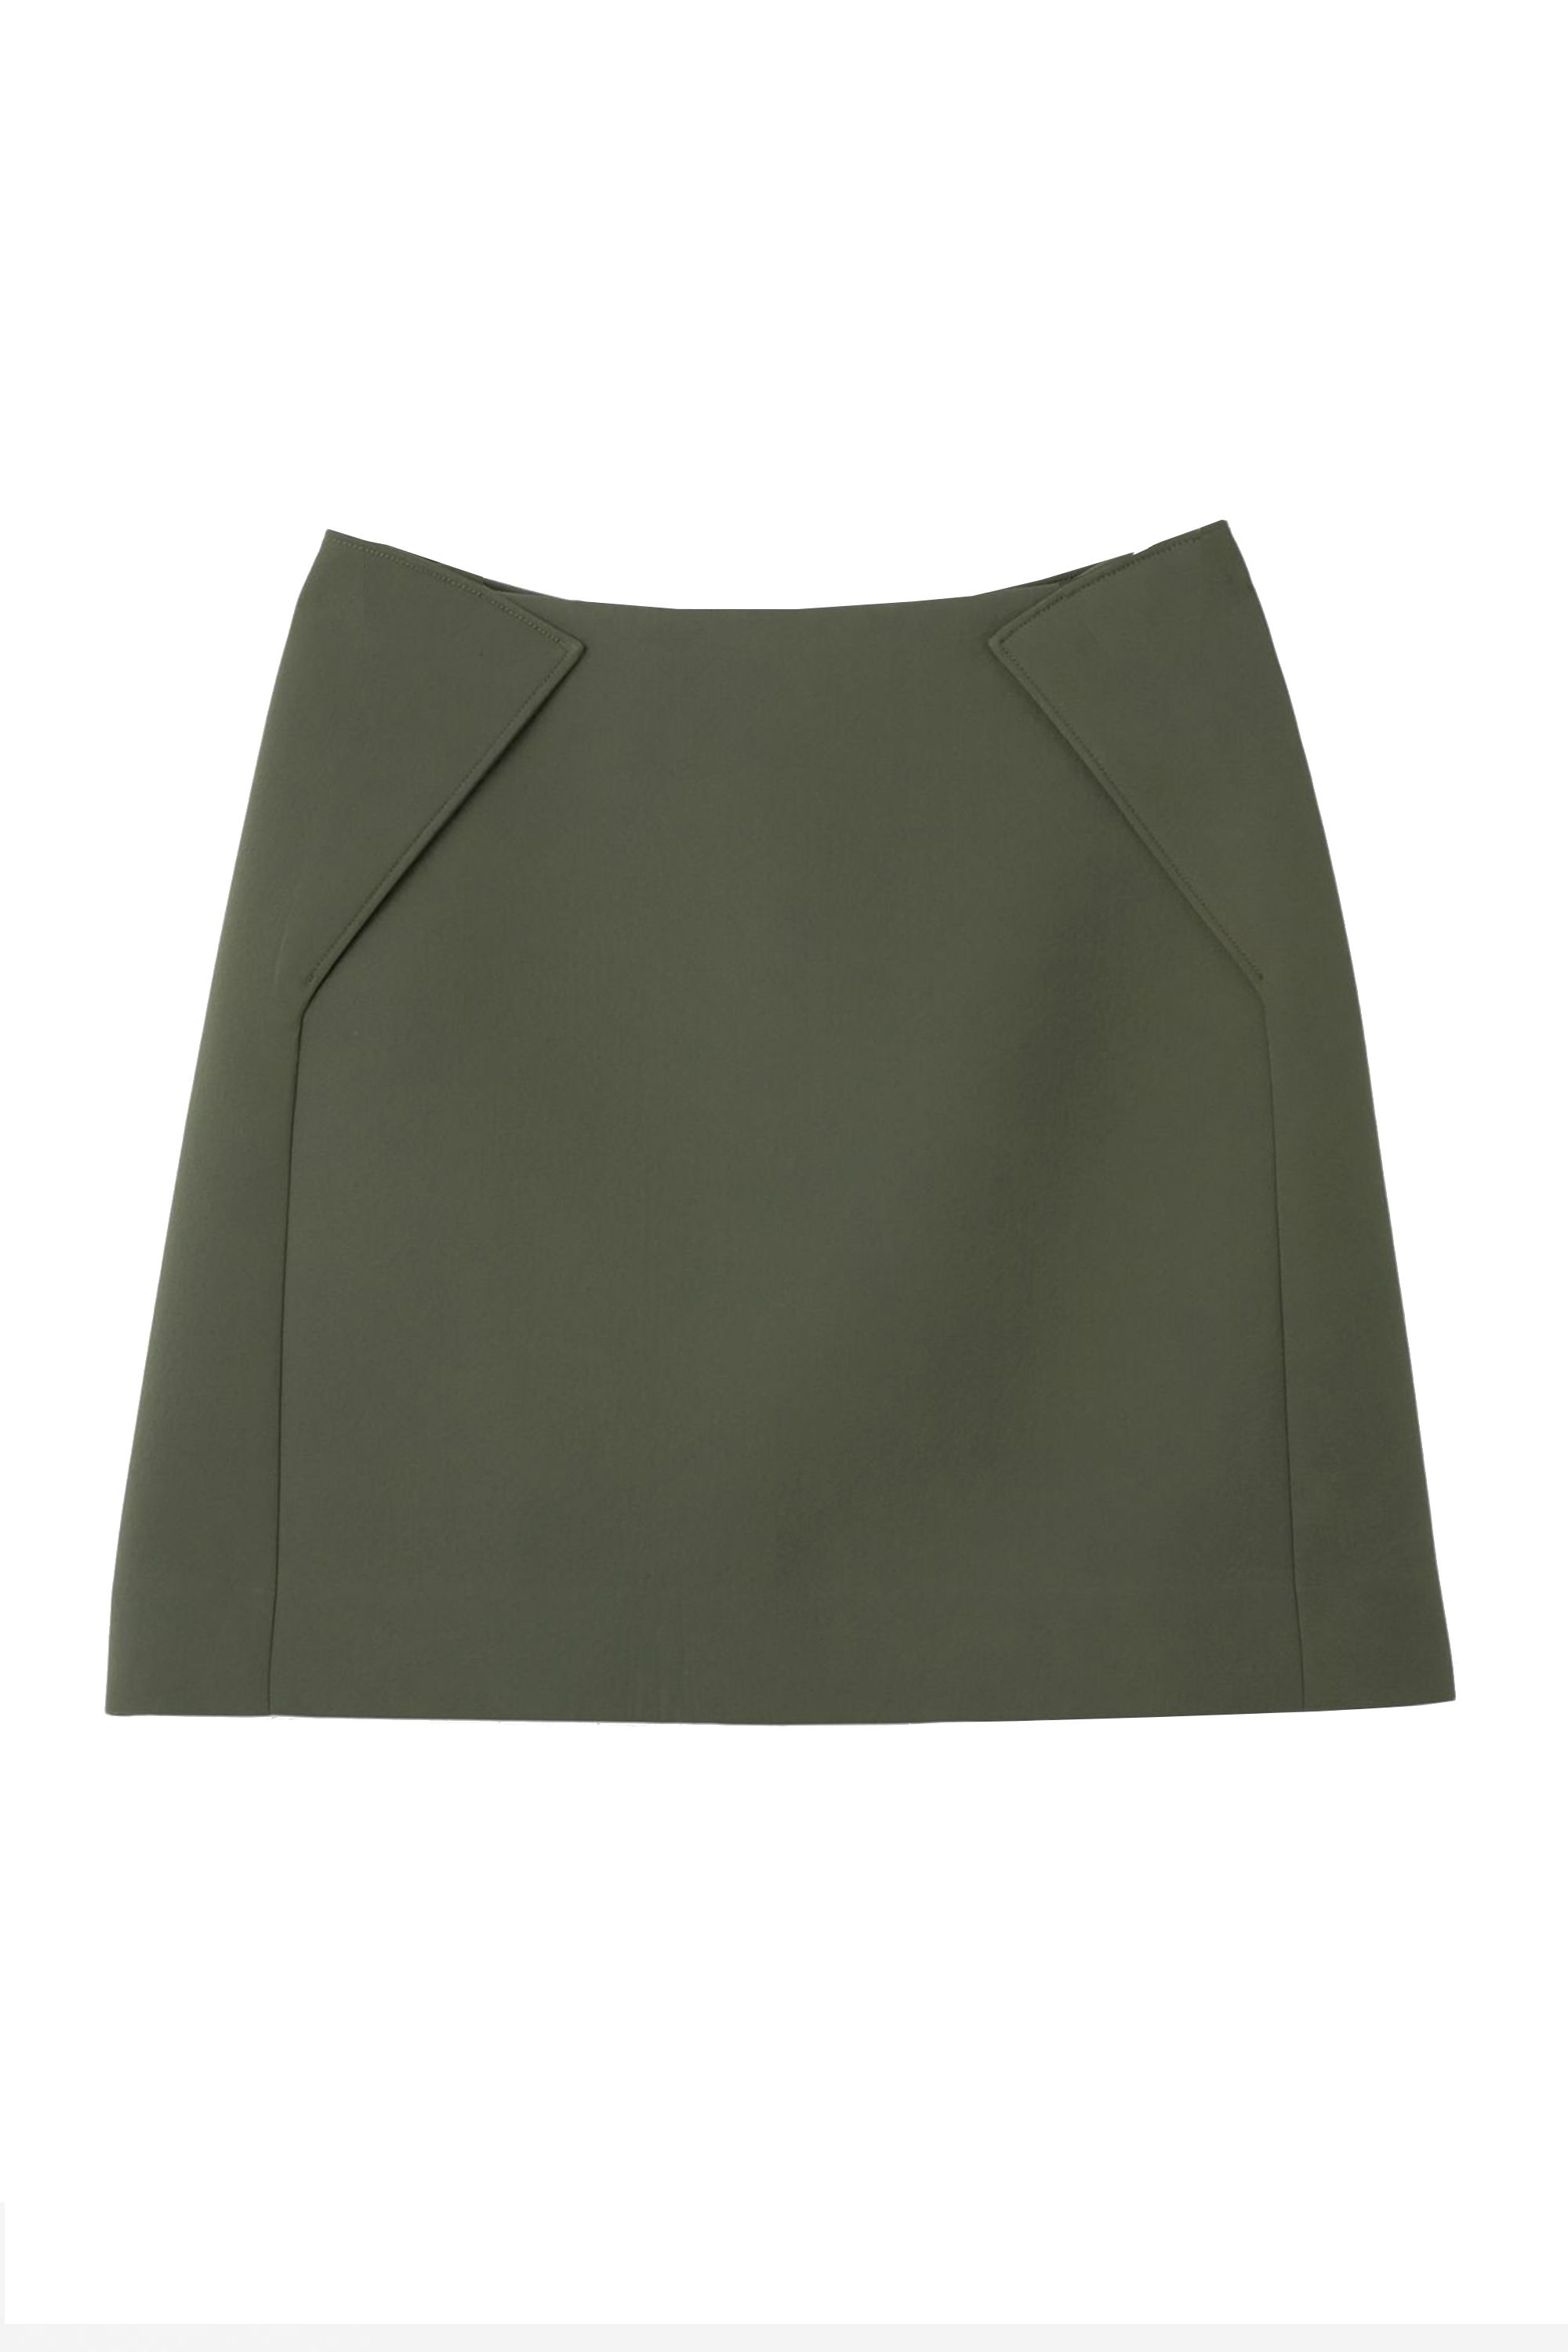 grey a line mini skirt